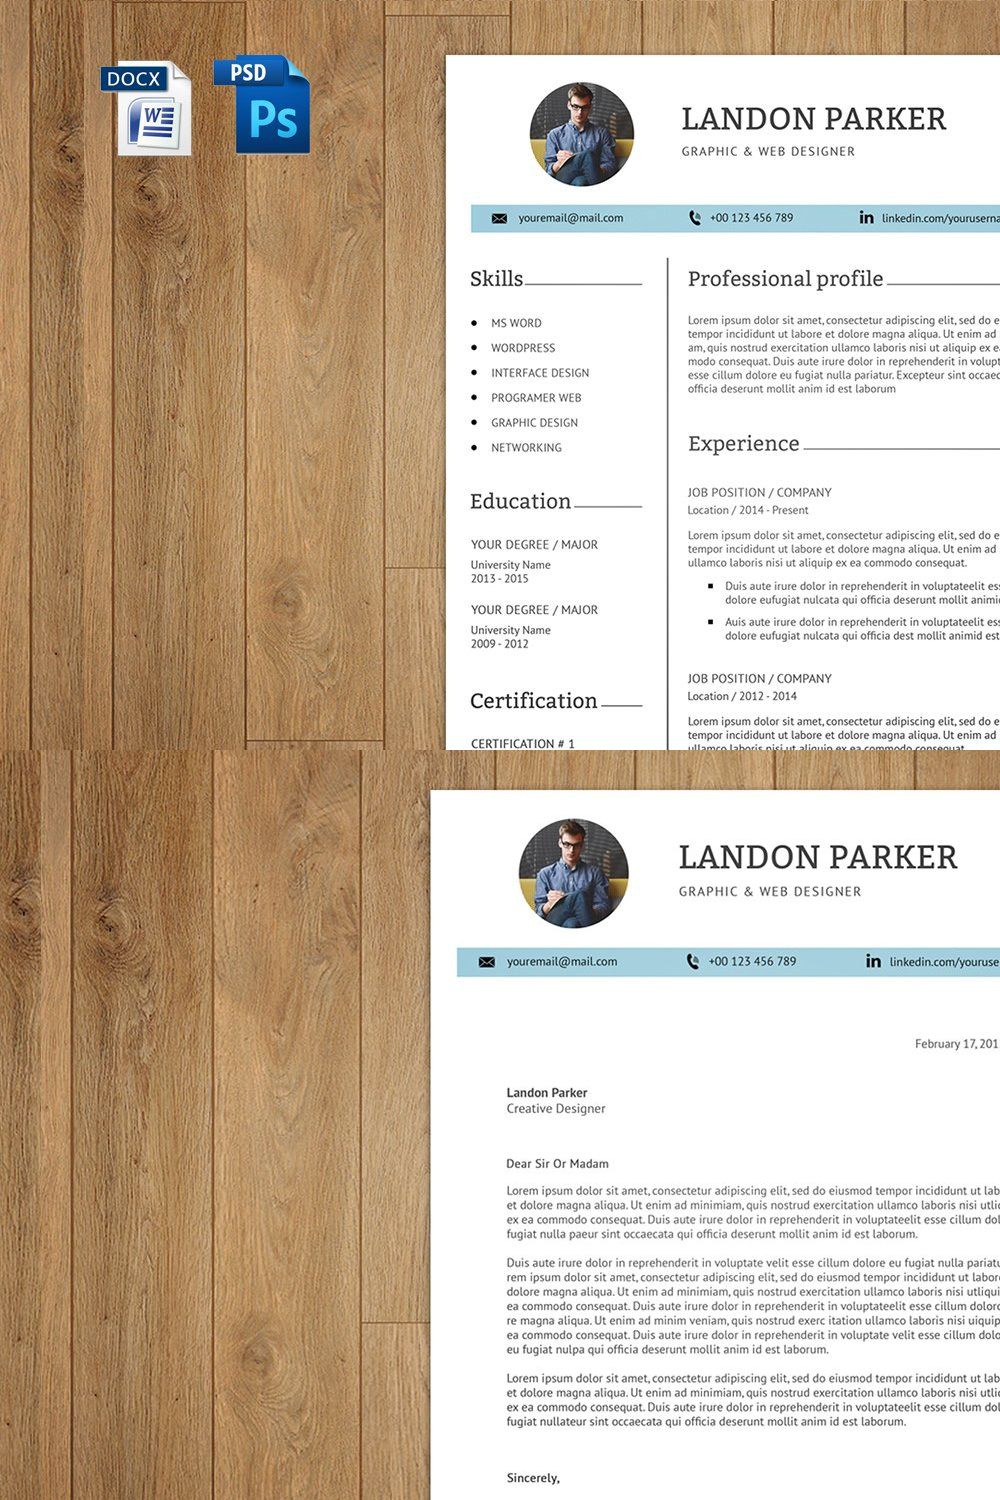 Resume & Cover Letter Template |V014 pinterest preview image.